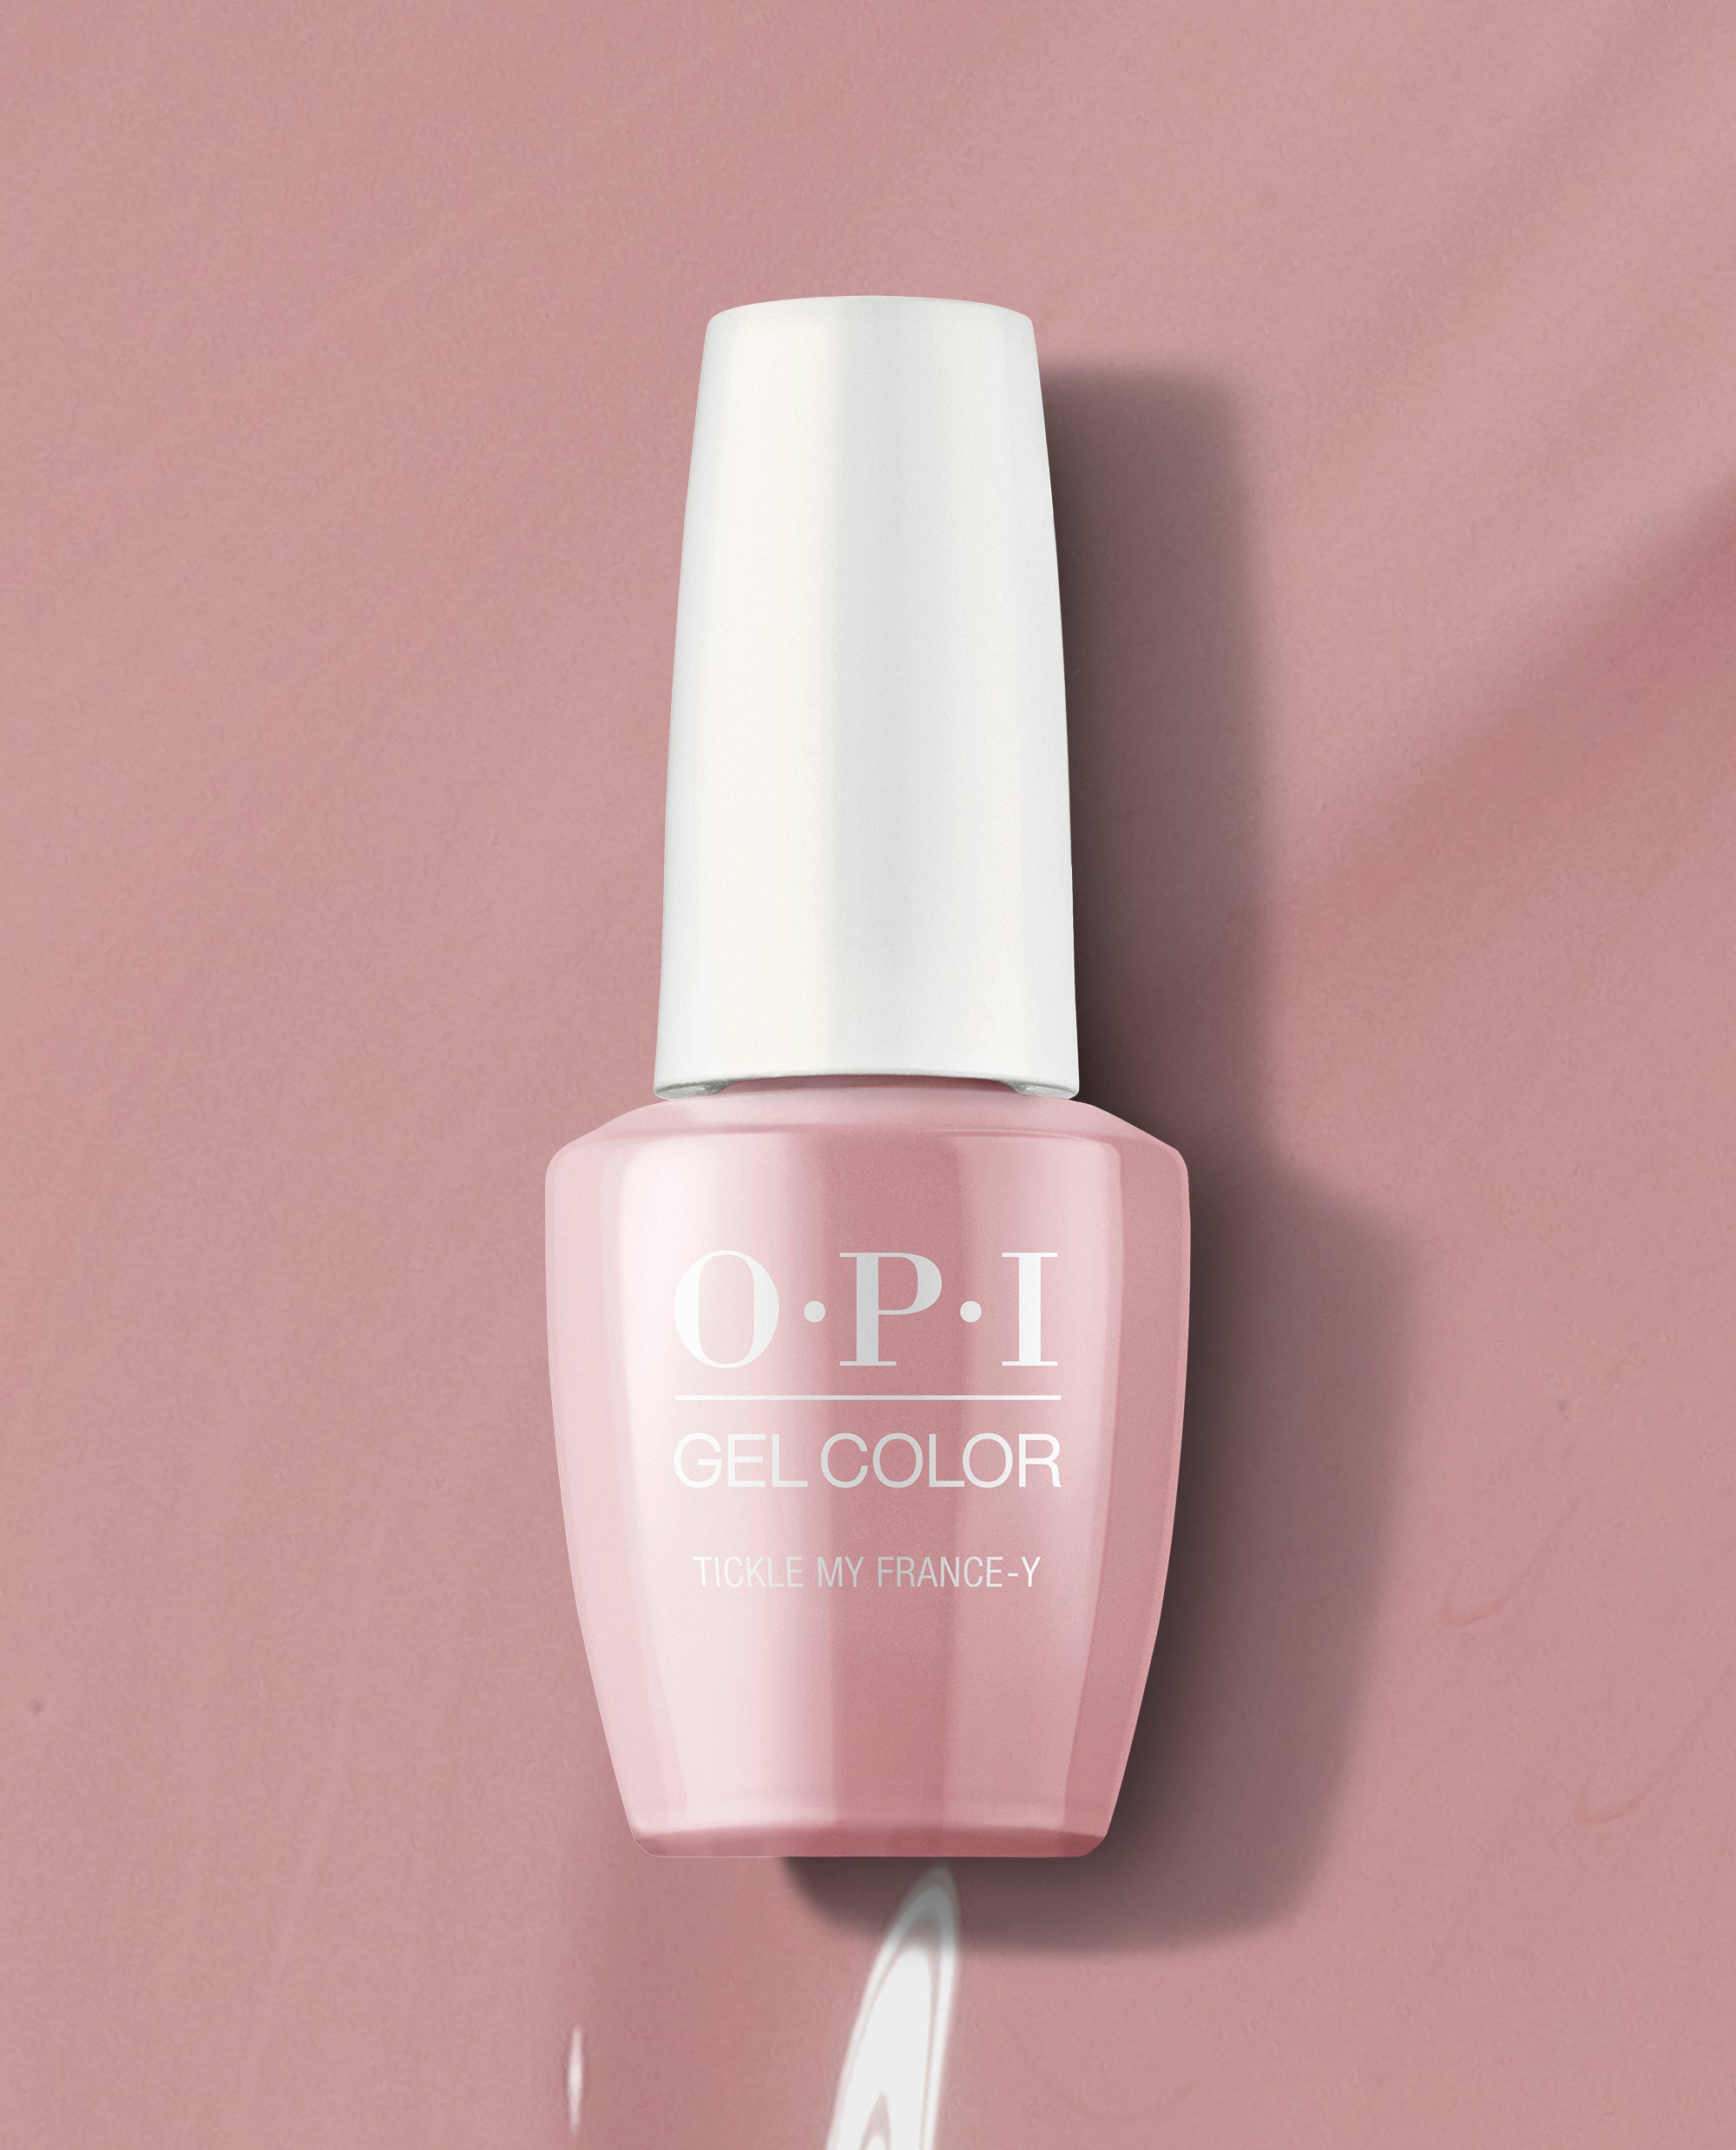 OPI Tickle My France-y Pink Gel Nail Polish